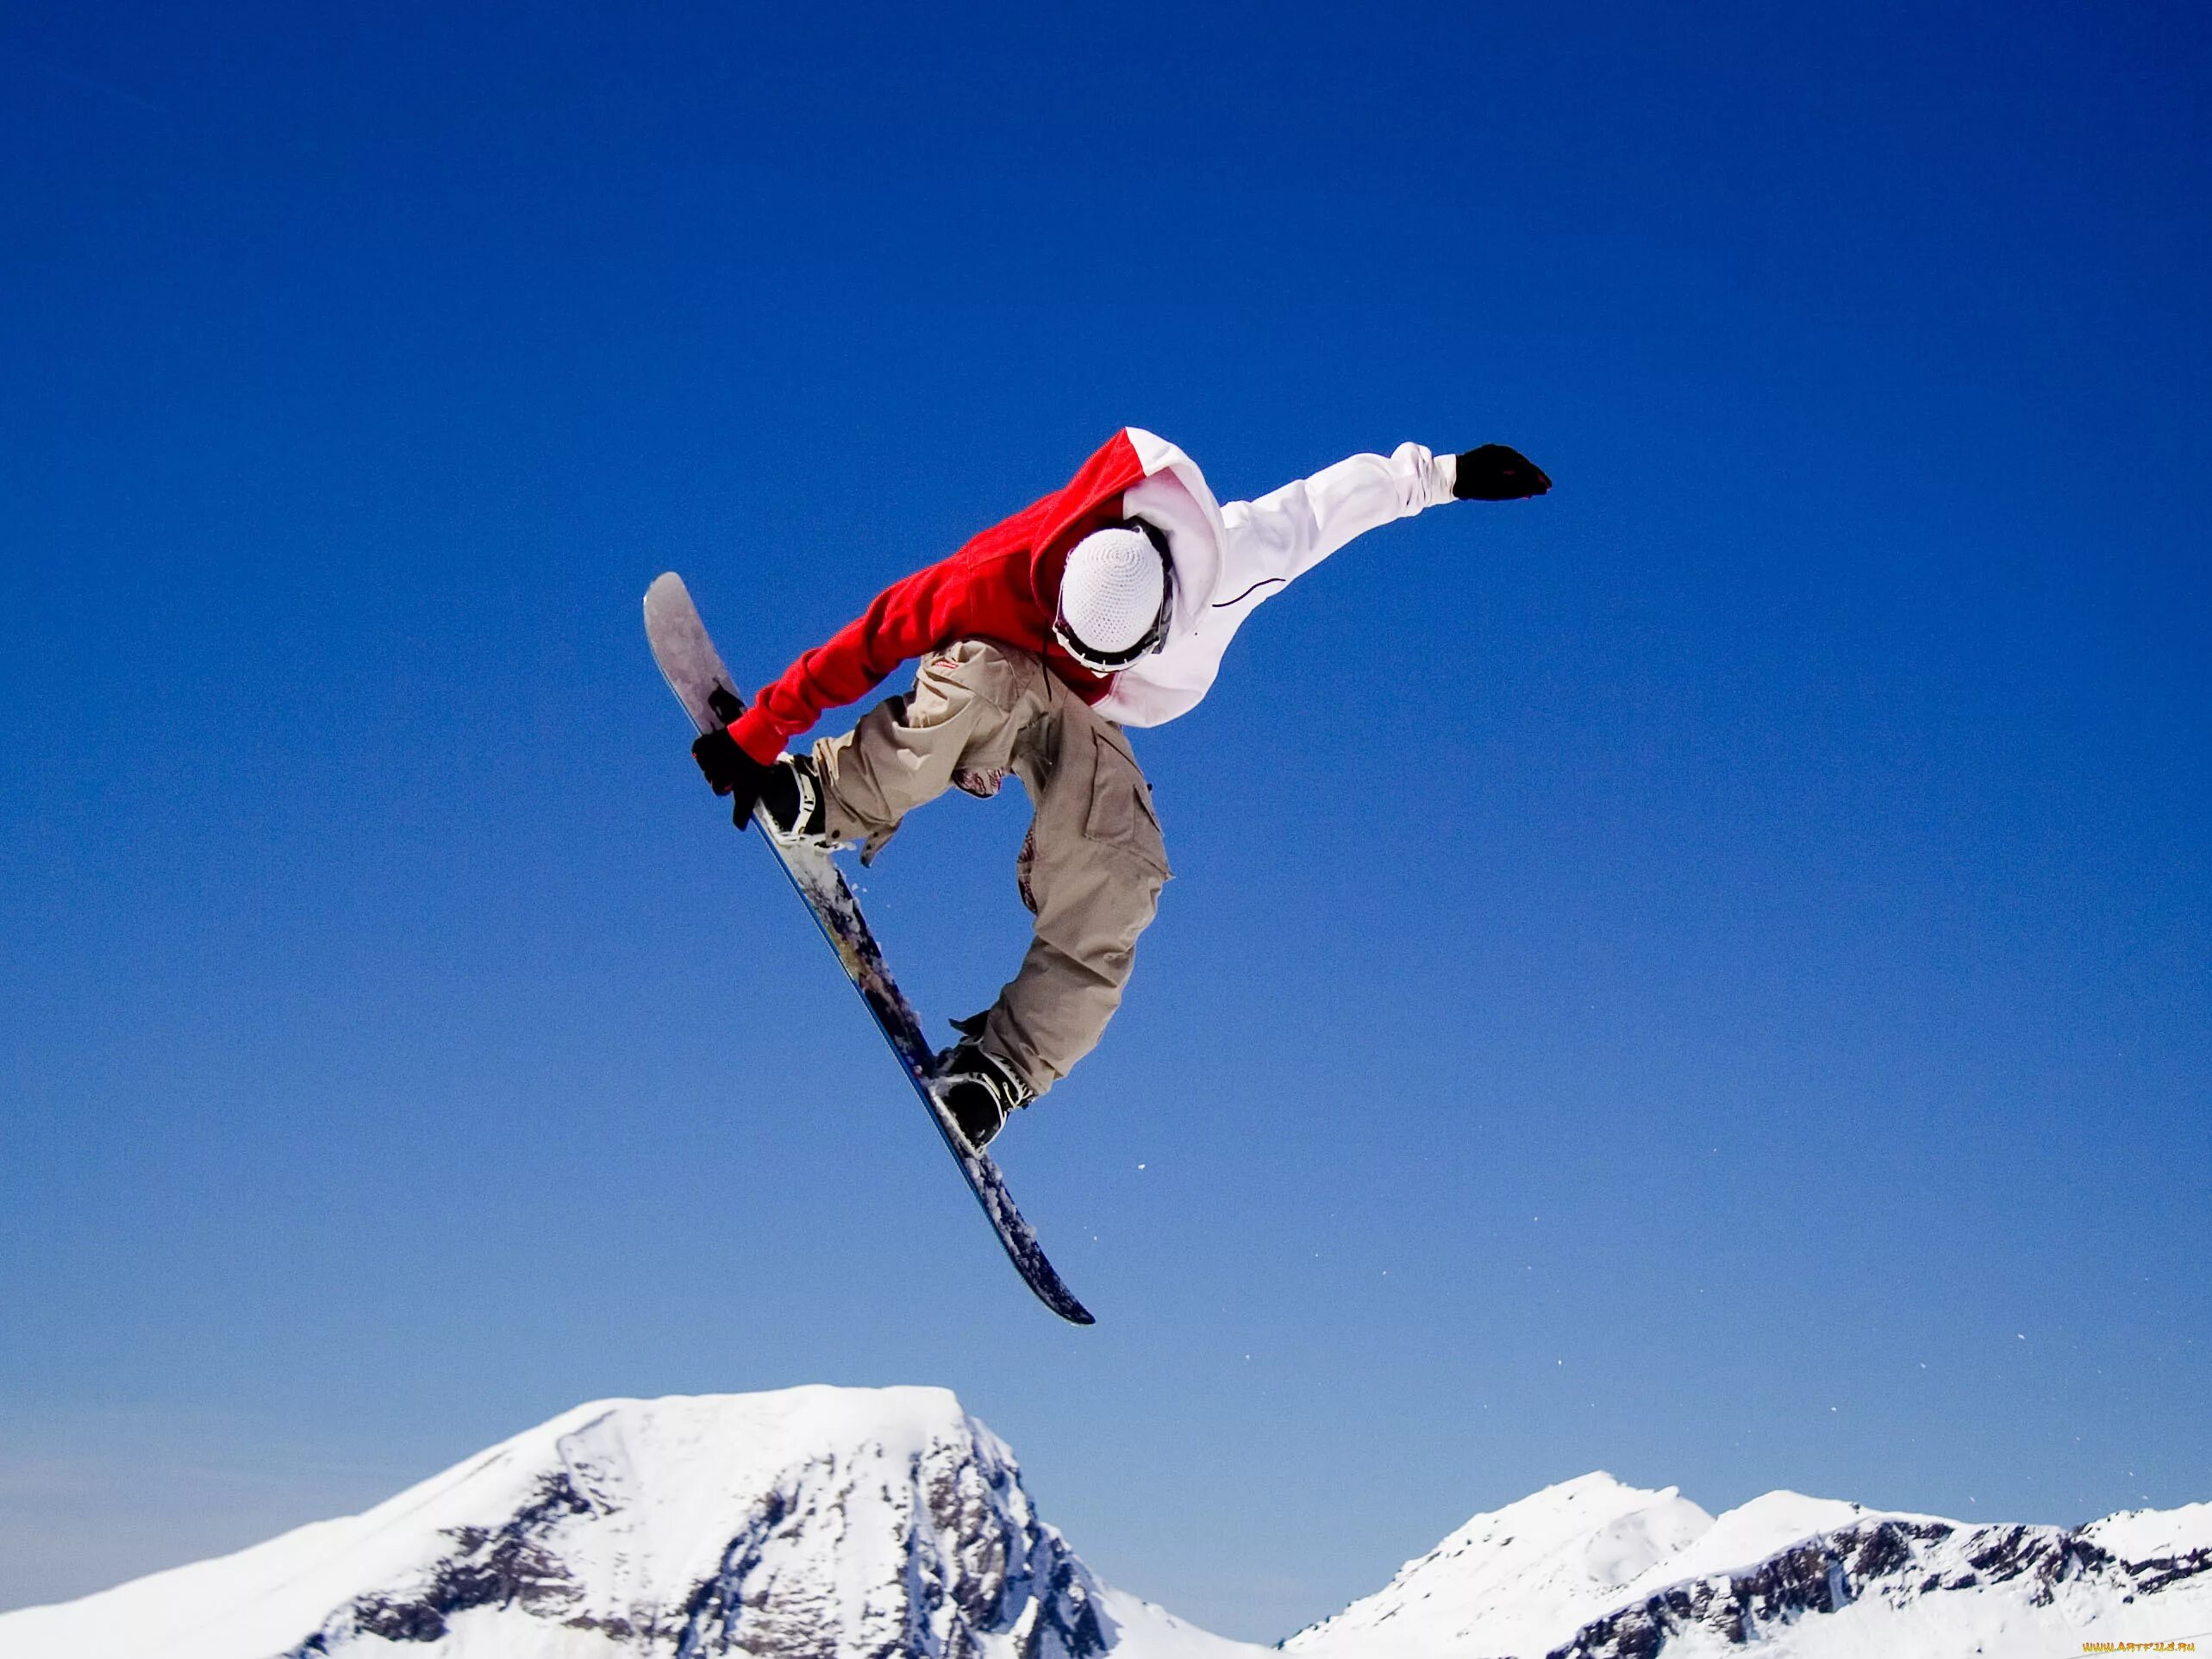 Go snowboarding. Фристайл сноуборд. Зимний спорт. Сноубординг-экстремальный вид спорта. Трюки на сноуборде.